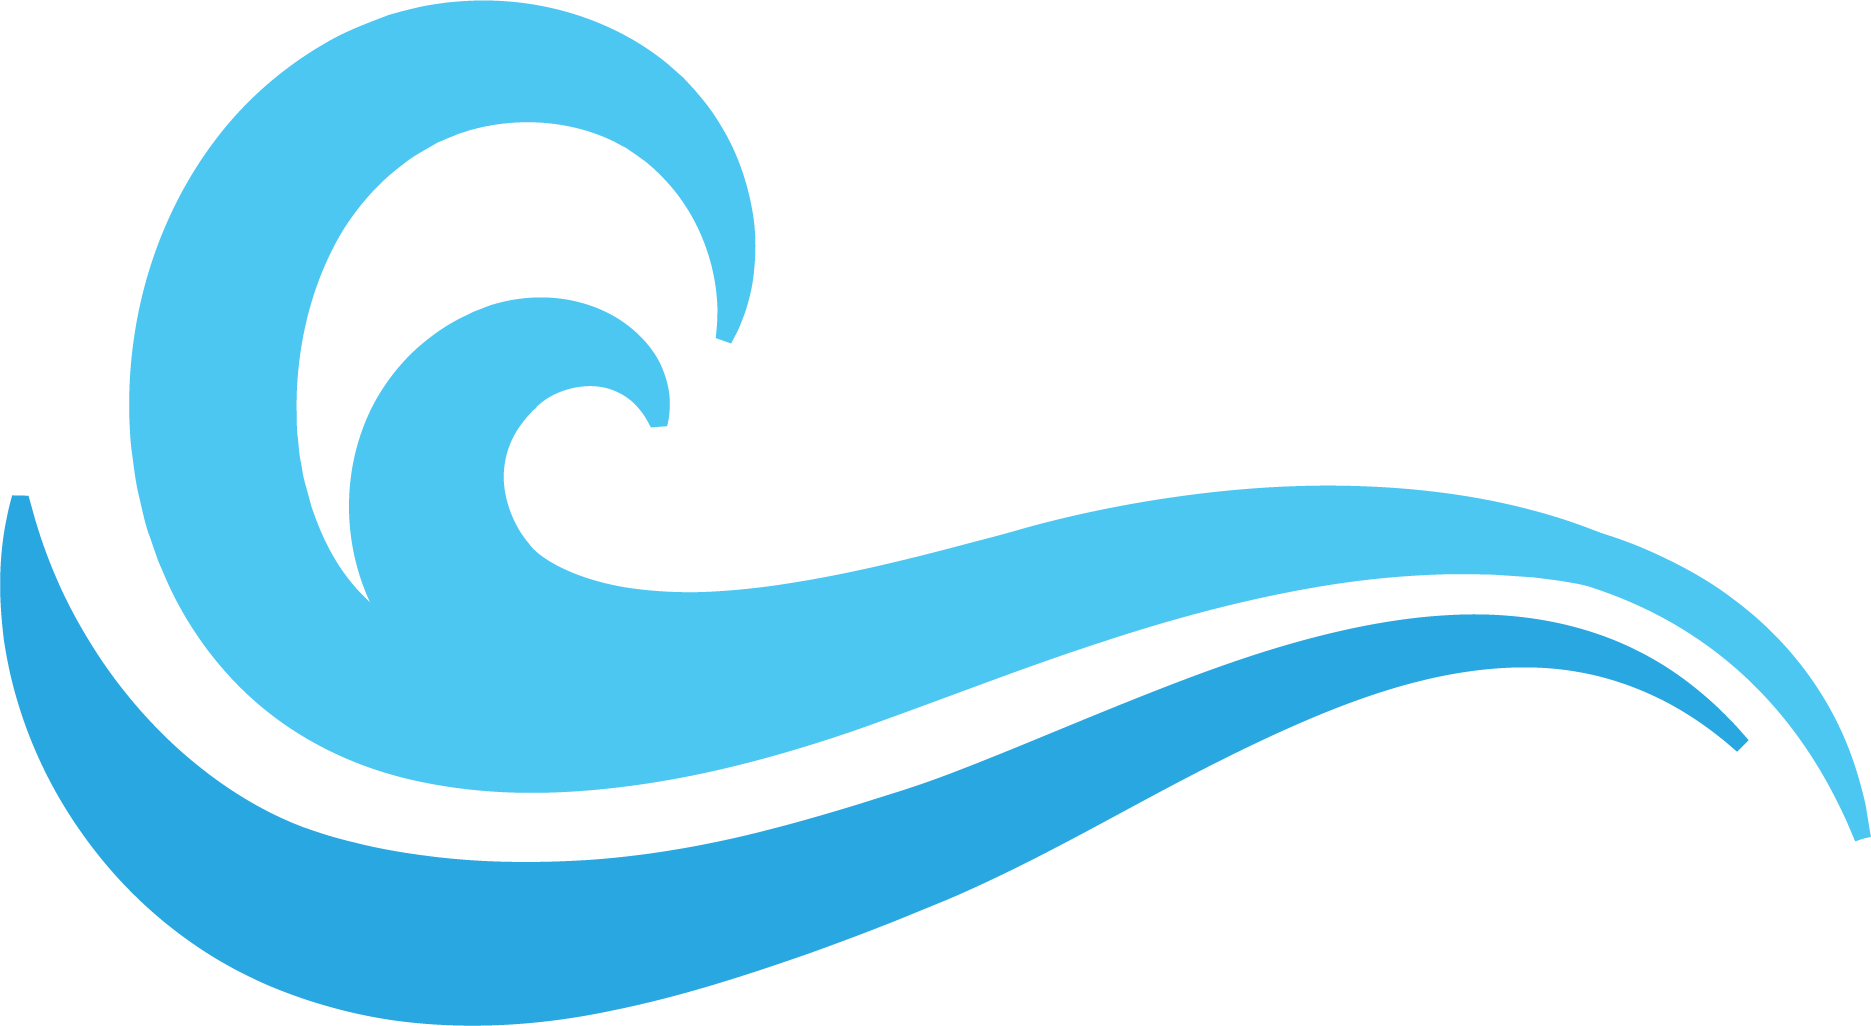 ichnusaorg_43kisspng-logo-blue-wind-wave-sea-level-wave-curve-5a8628d85aa543.6860425015187417203713.png